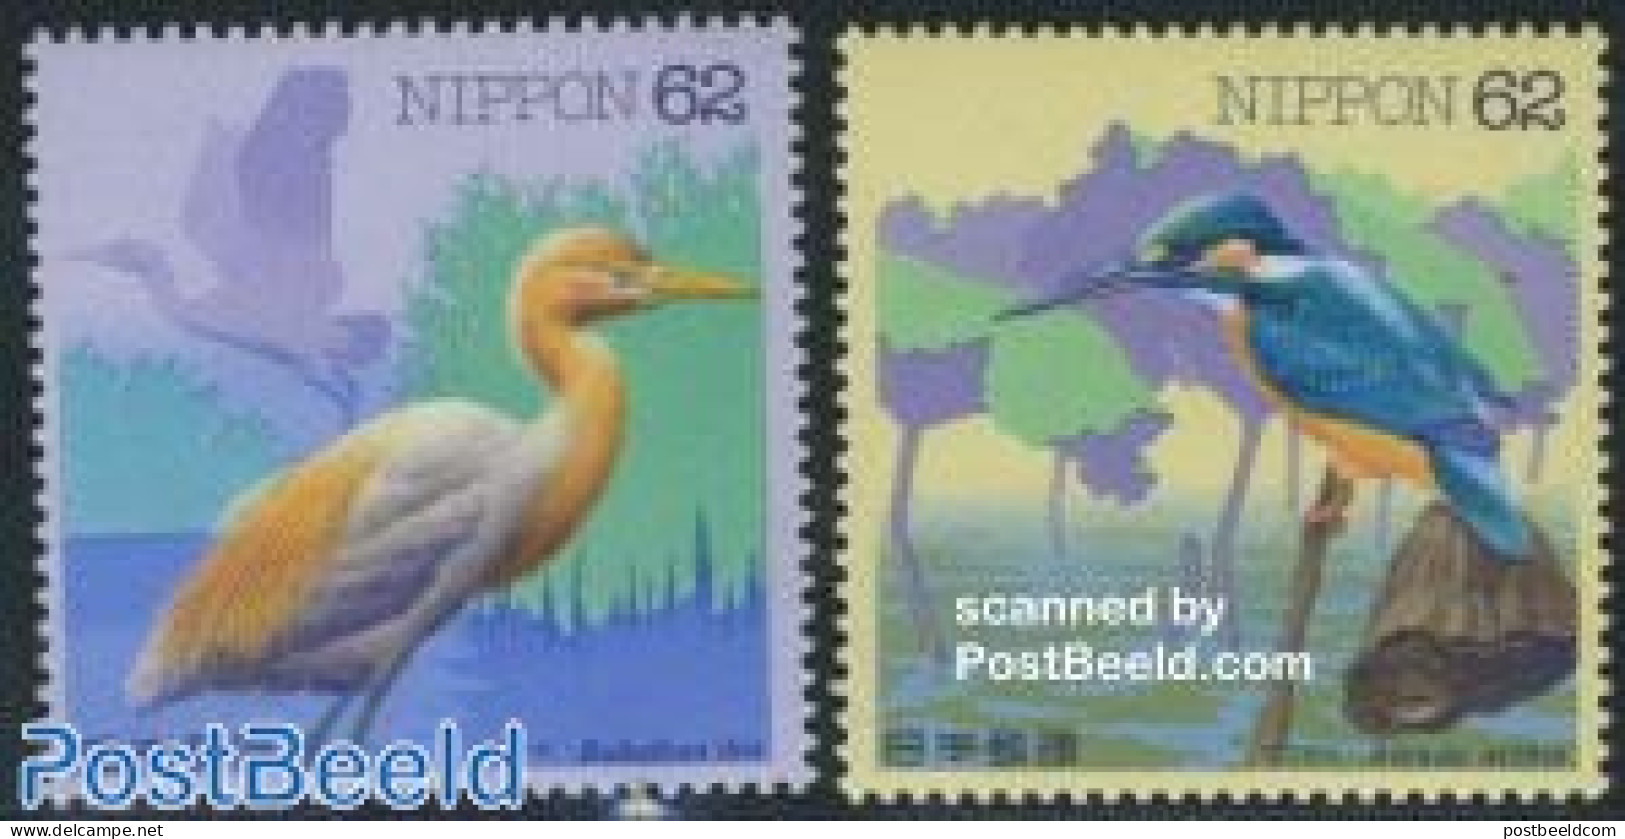 Japan 1993 Water Birds 2v, Mint NH, Nature - Birds - Kingfishers - Nuovi